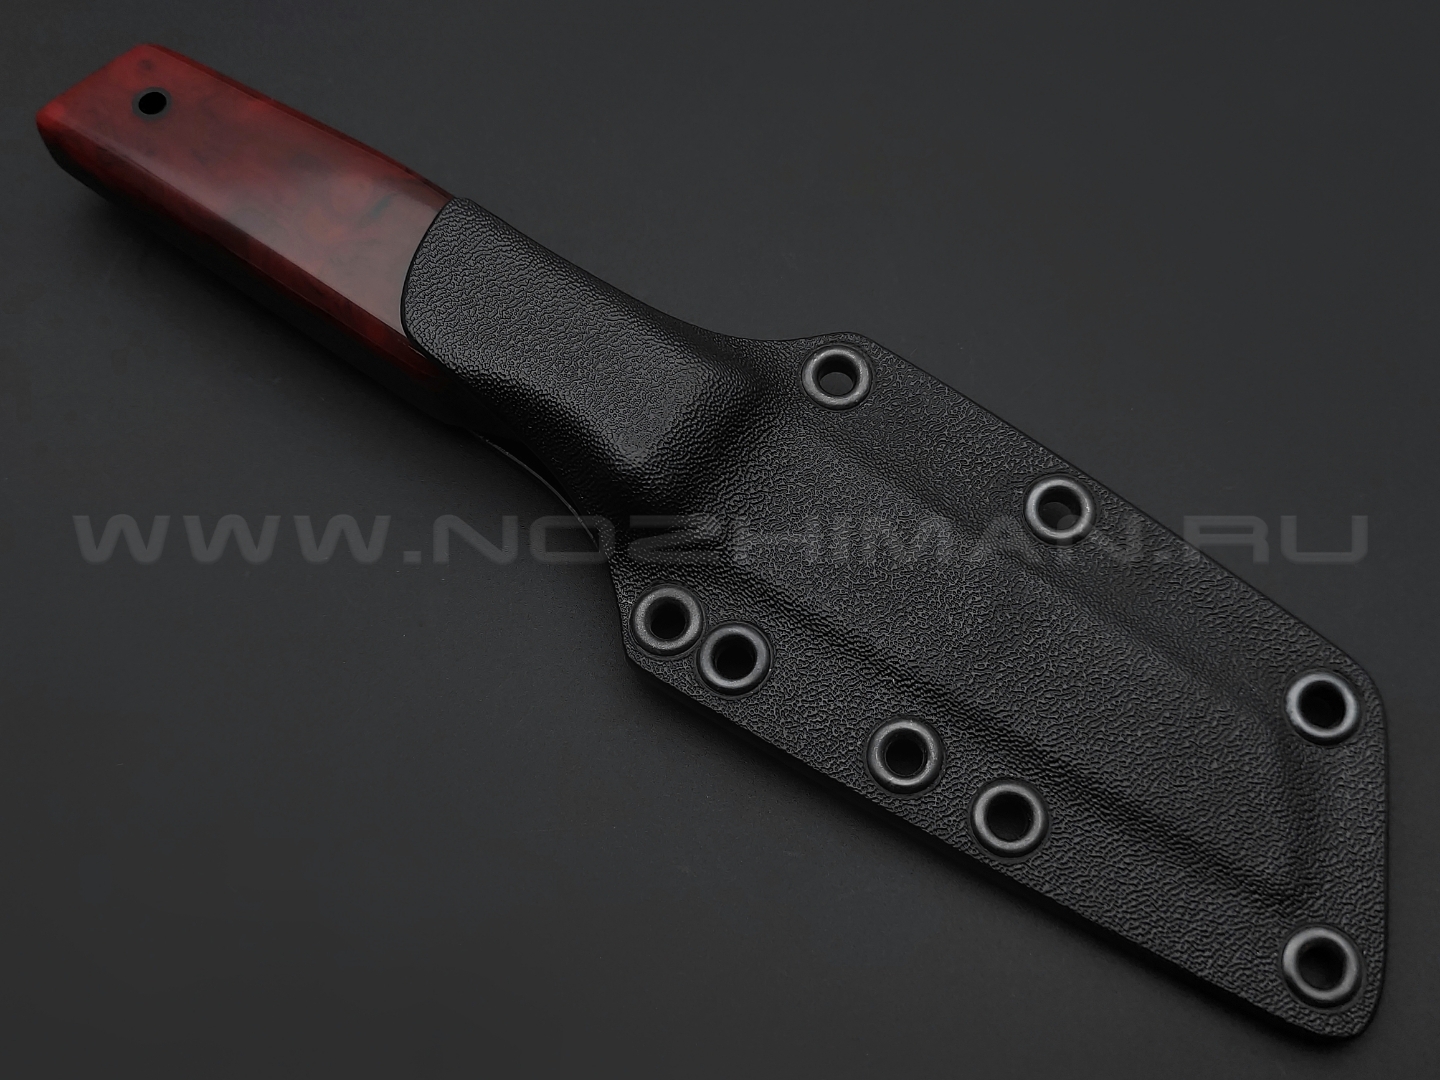 Волчий Век нож "Технослоник" сталь Niolox WA, рукоять композит, G10